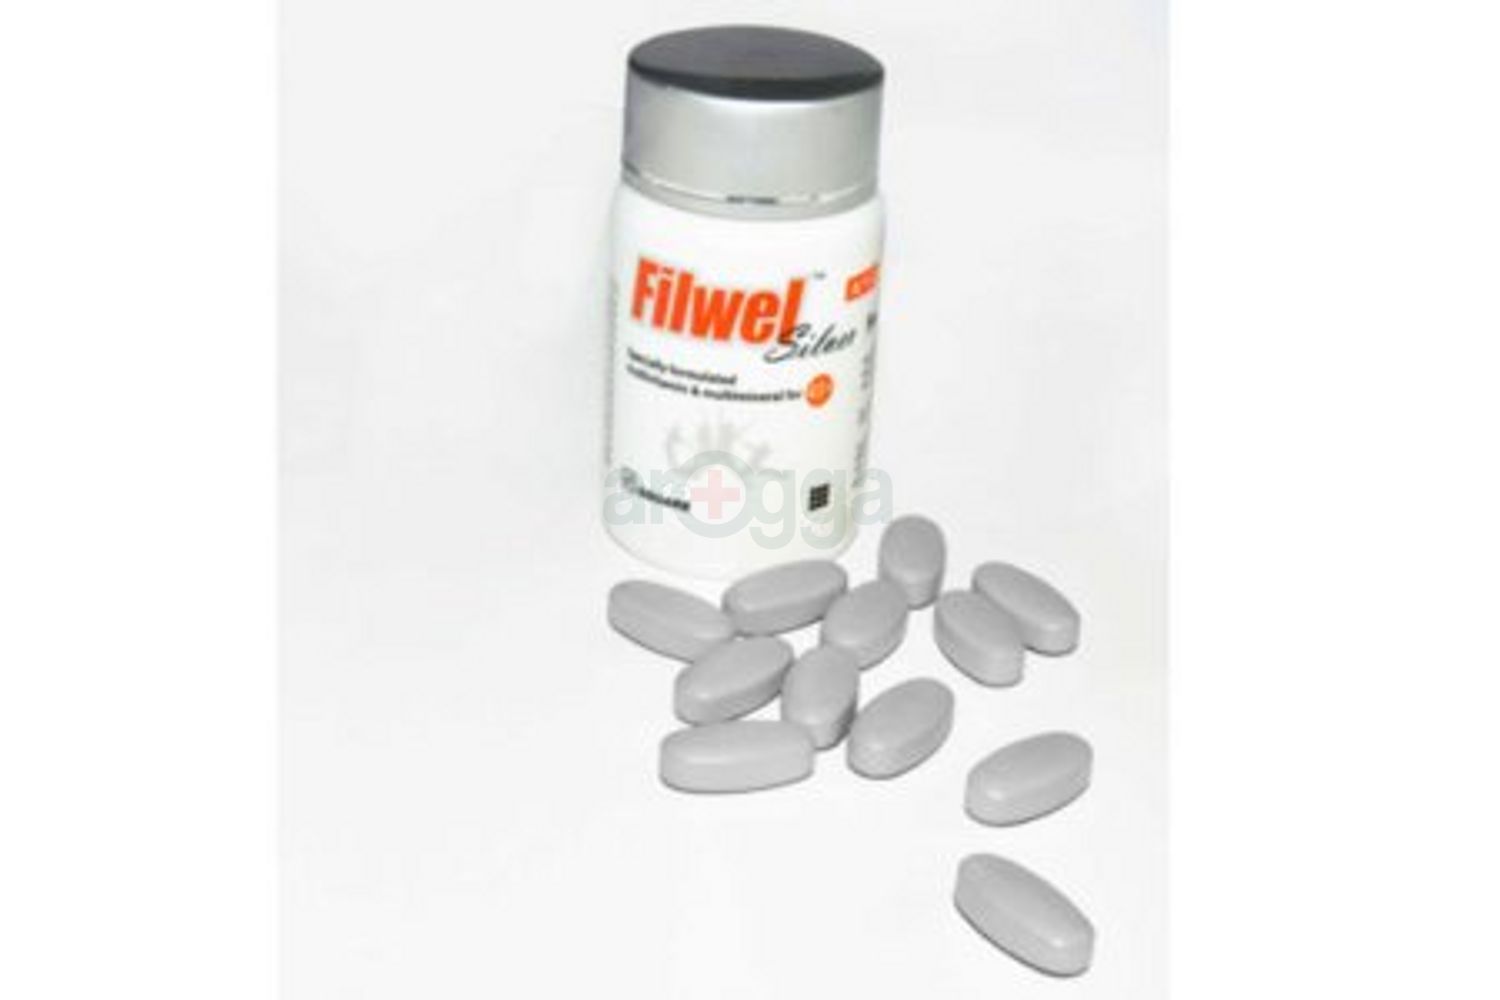 Filwel Silver